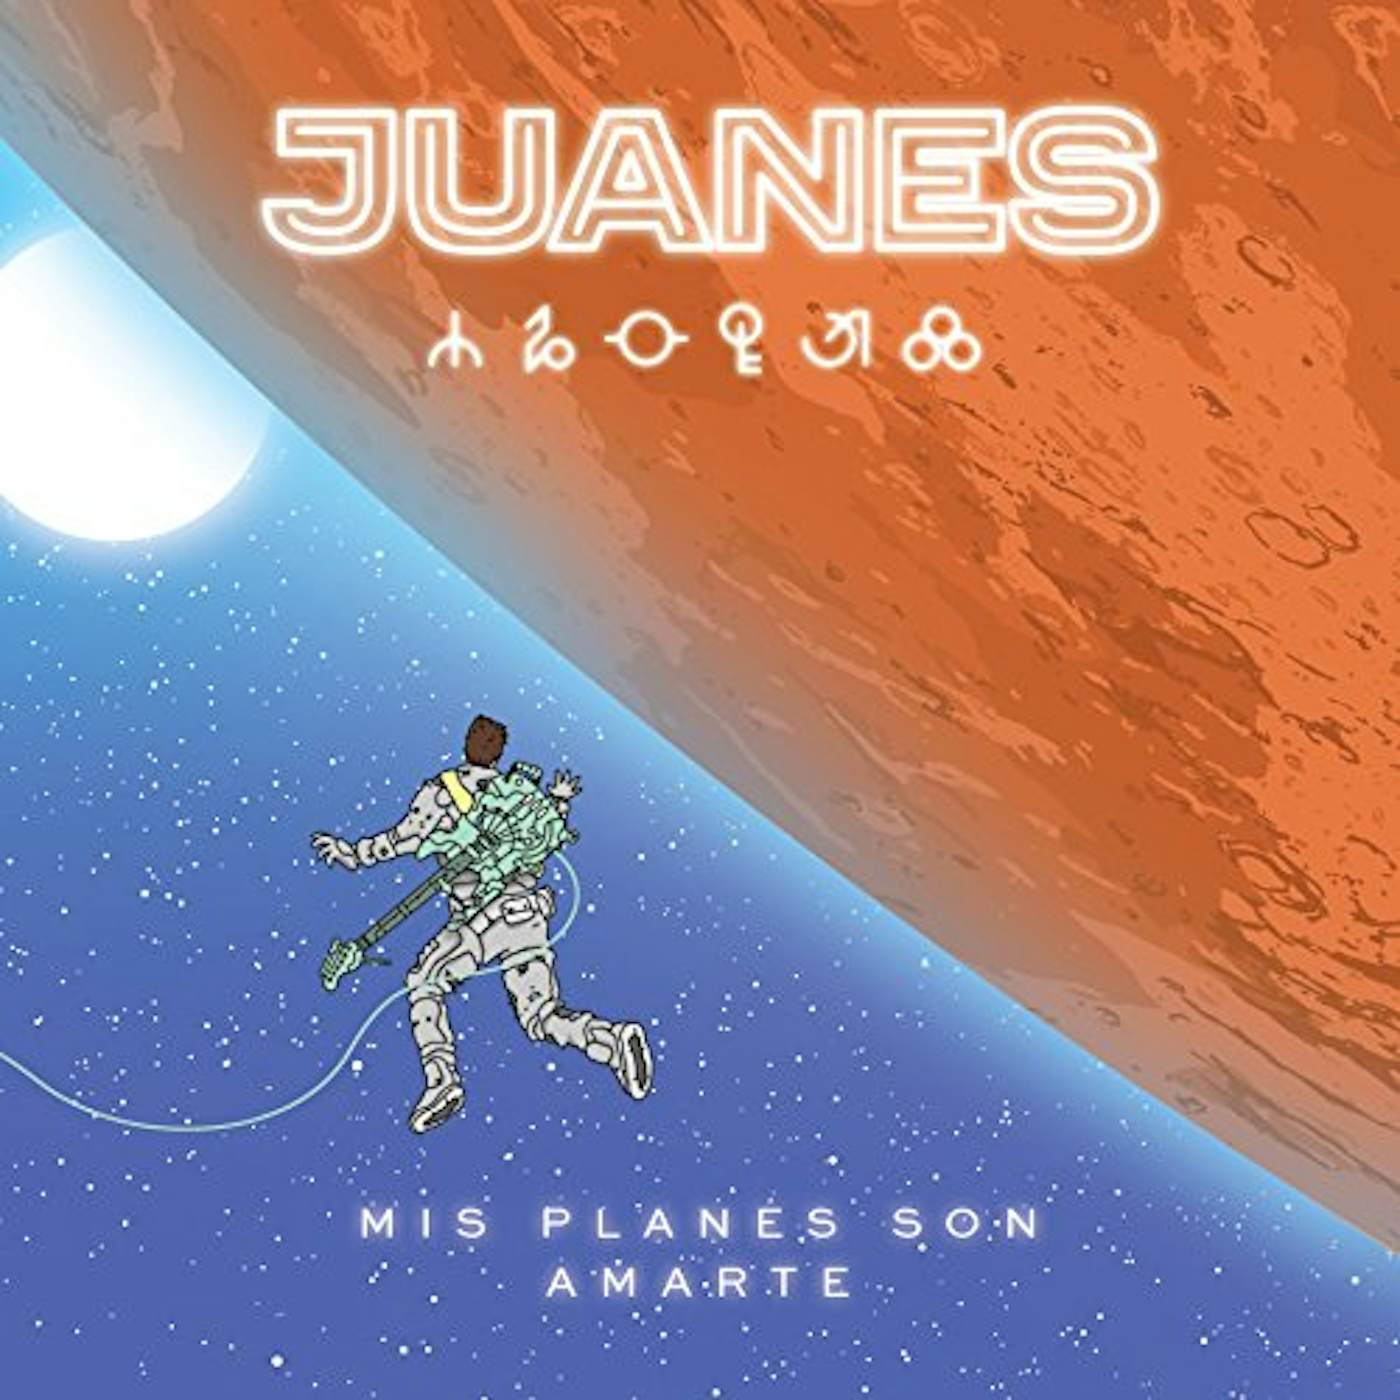 Juanes MIS PLANES SON AMARTE CD